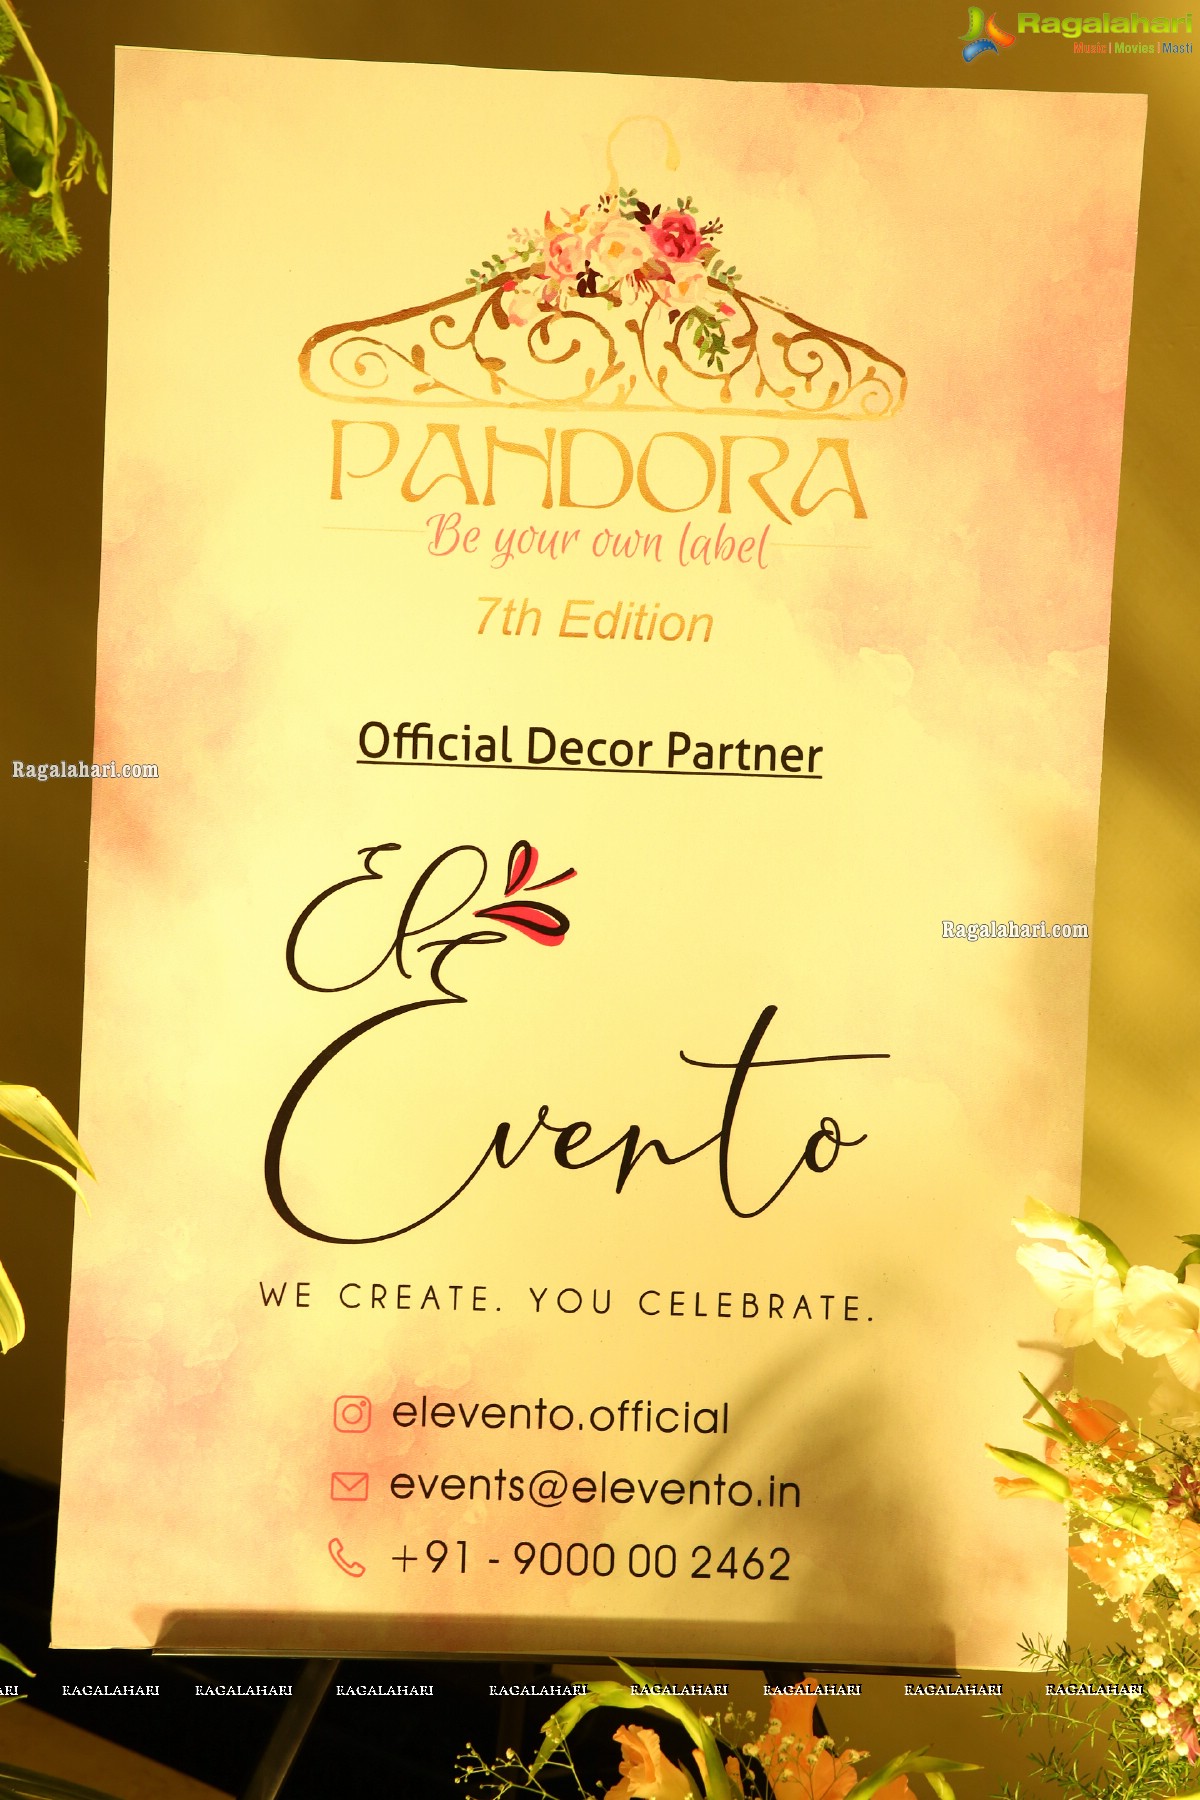 Pandora - Be Your Own Label, 7th Edition Kick Starts at Taj Deccan, Hyderabad